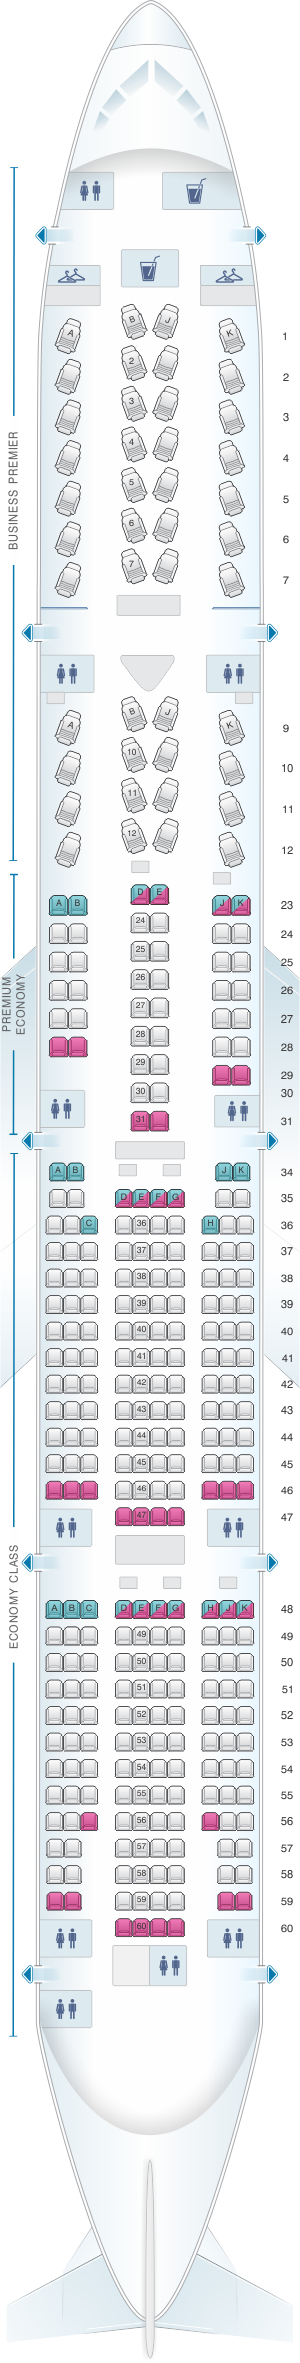 Boeing 777 Widebody Seat Map